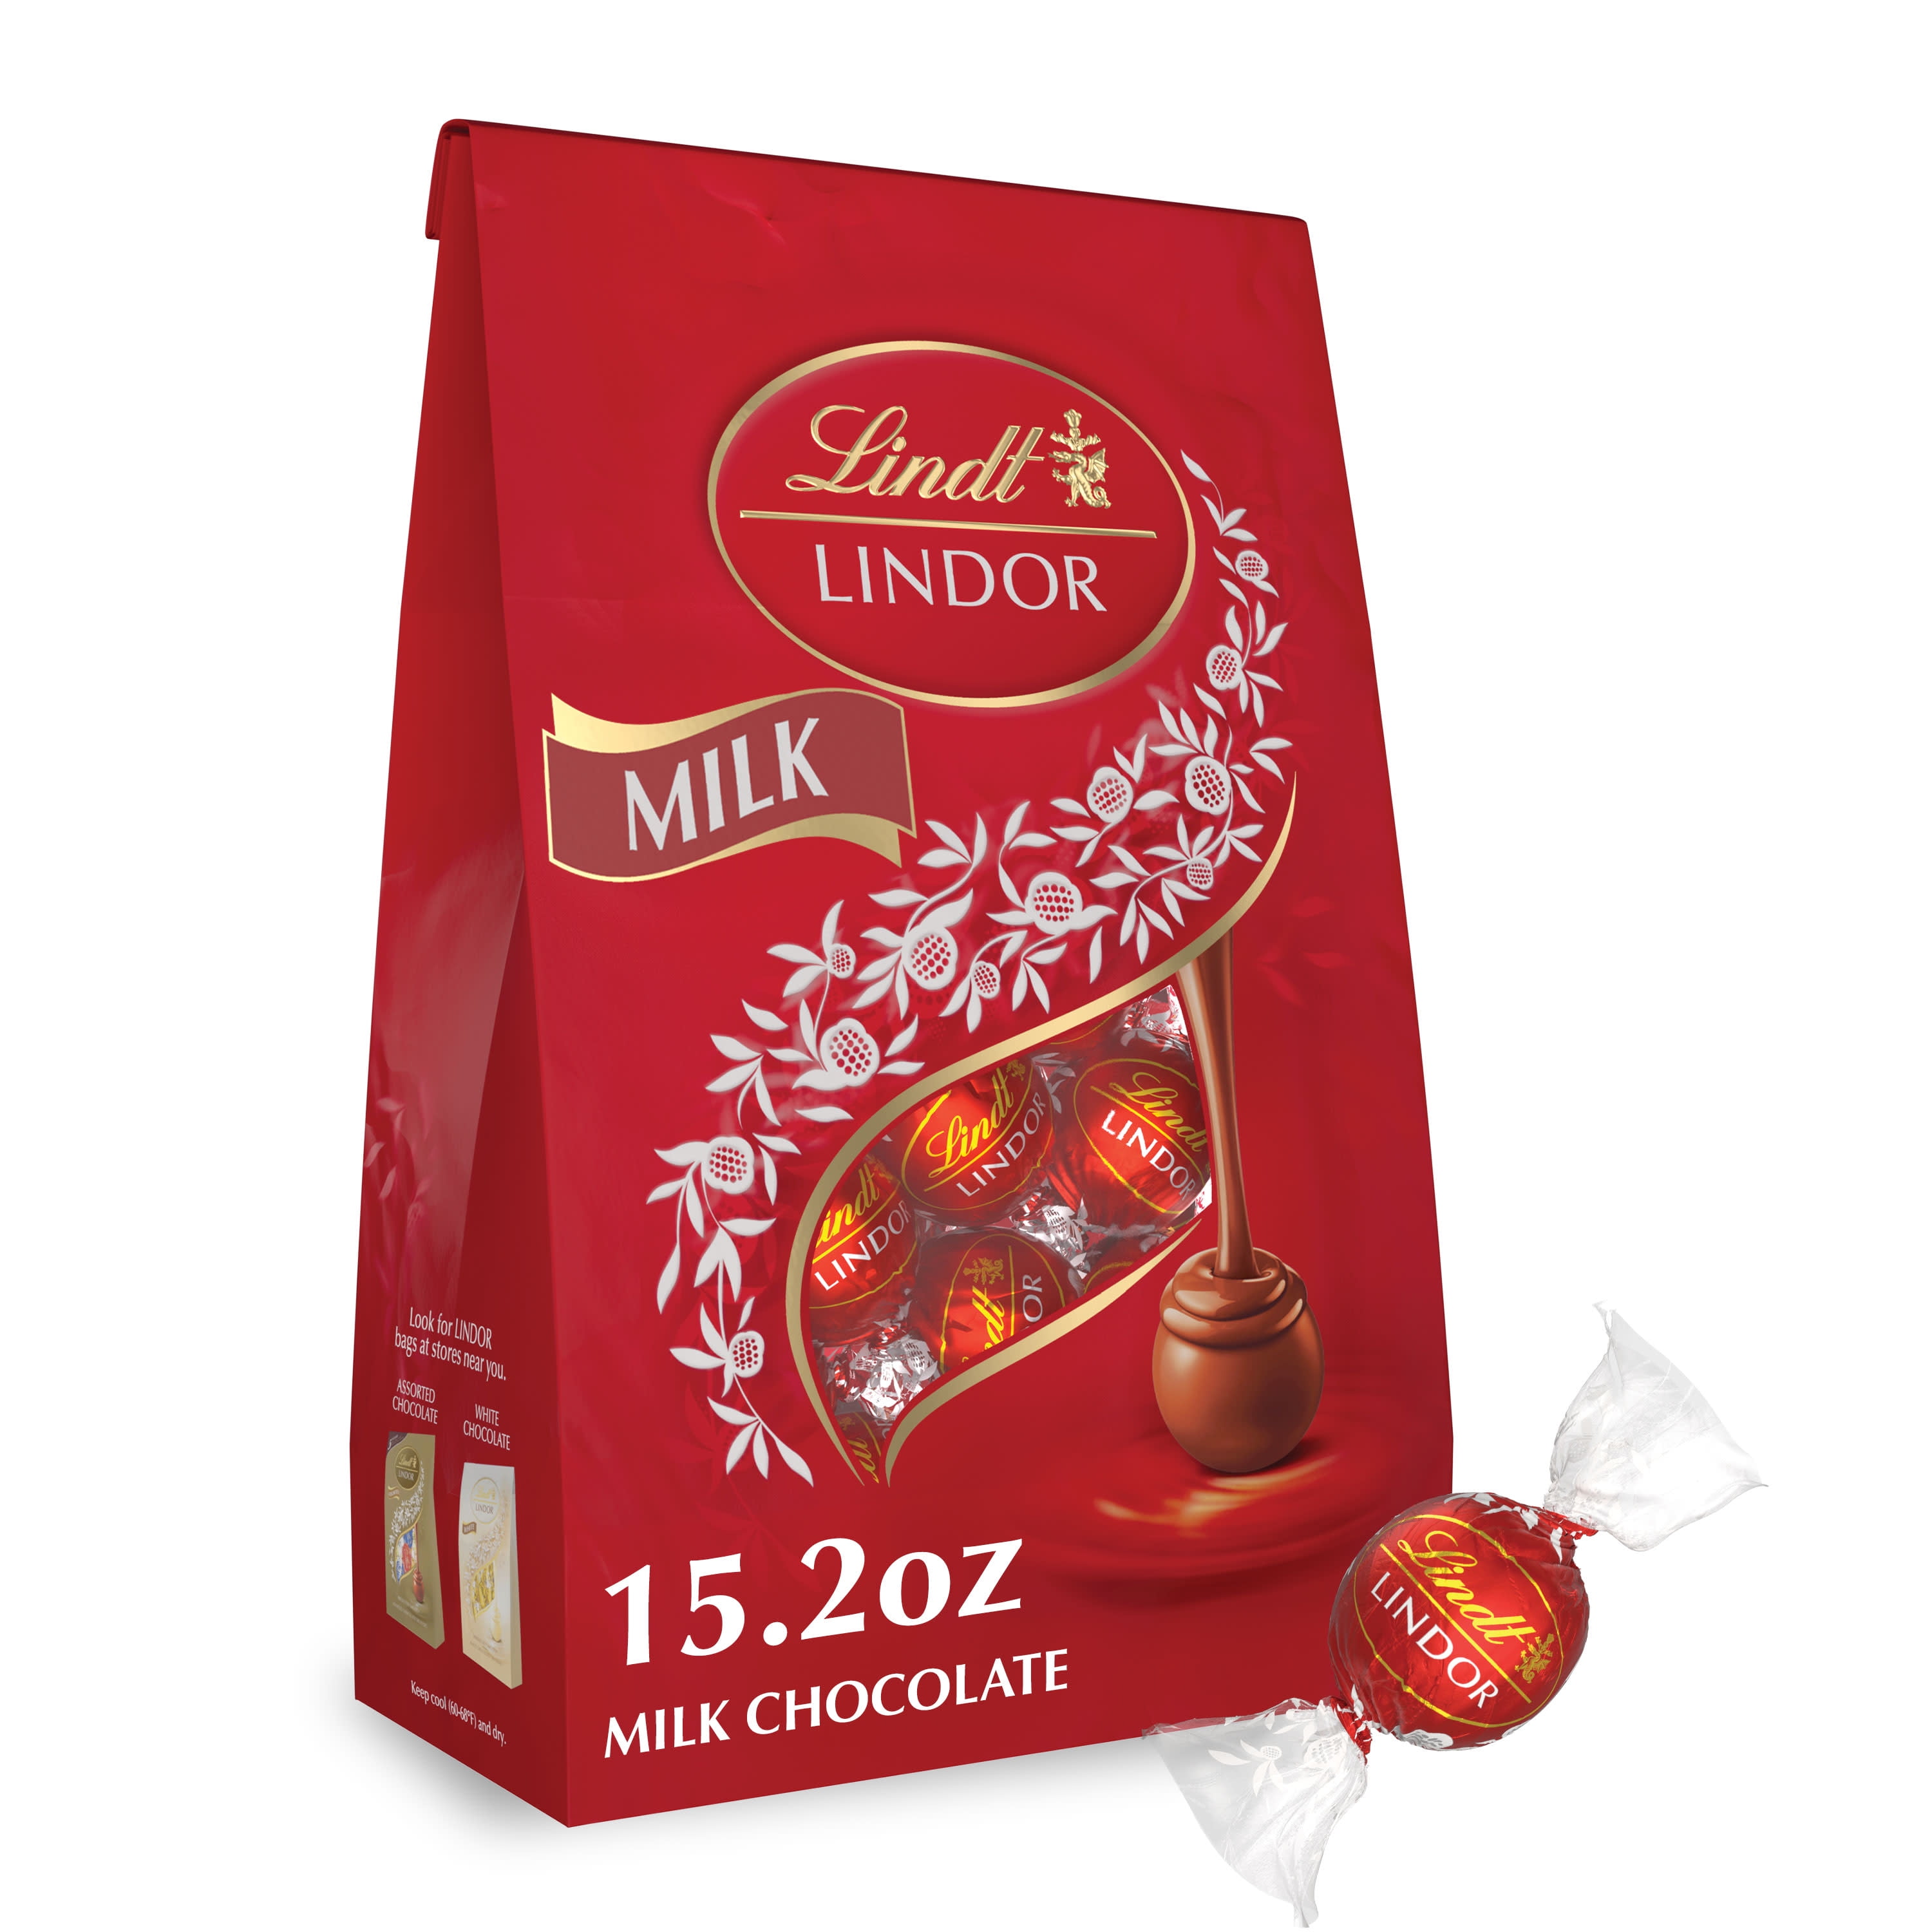 Lindt Lindor Milk Chocolate Truffles